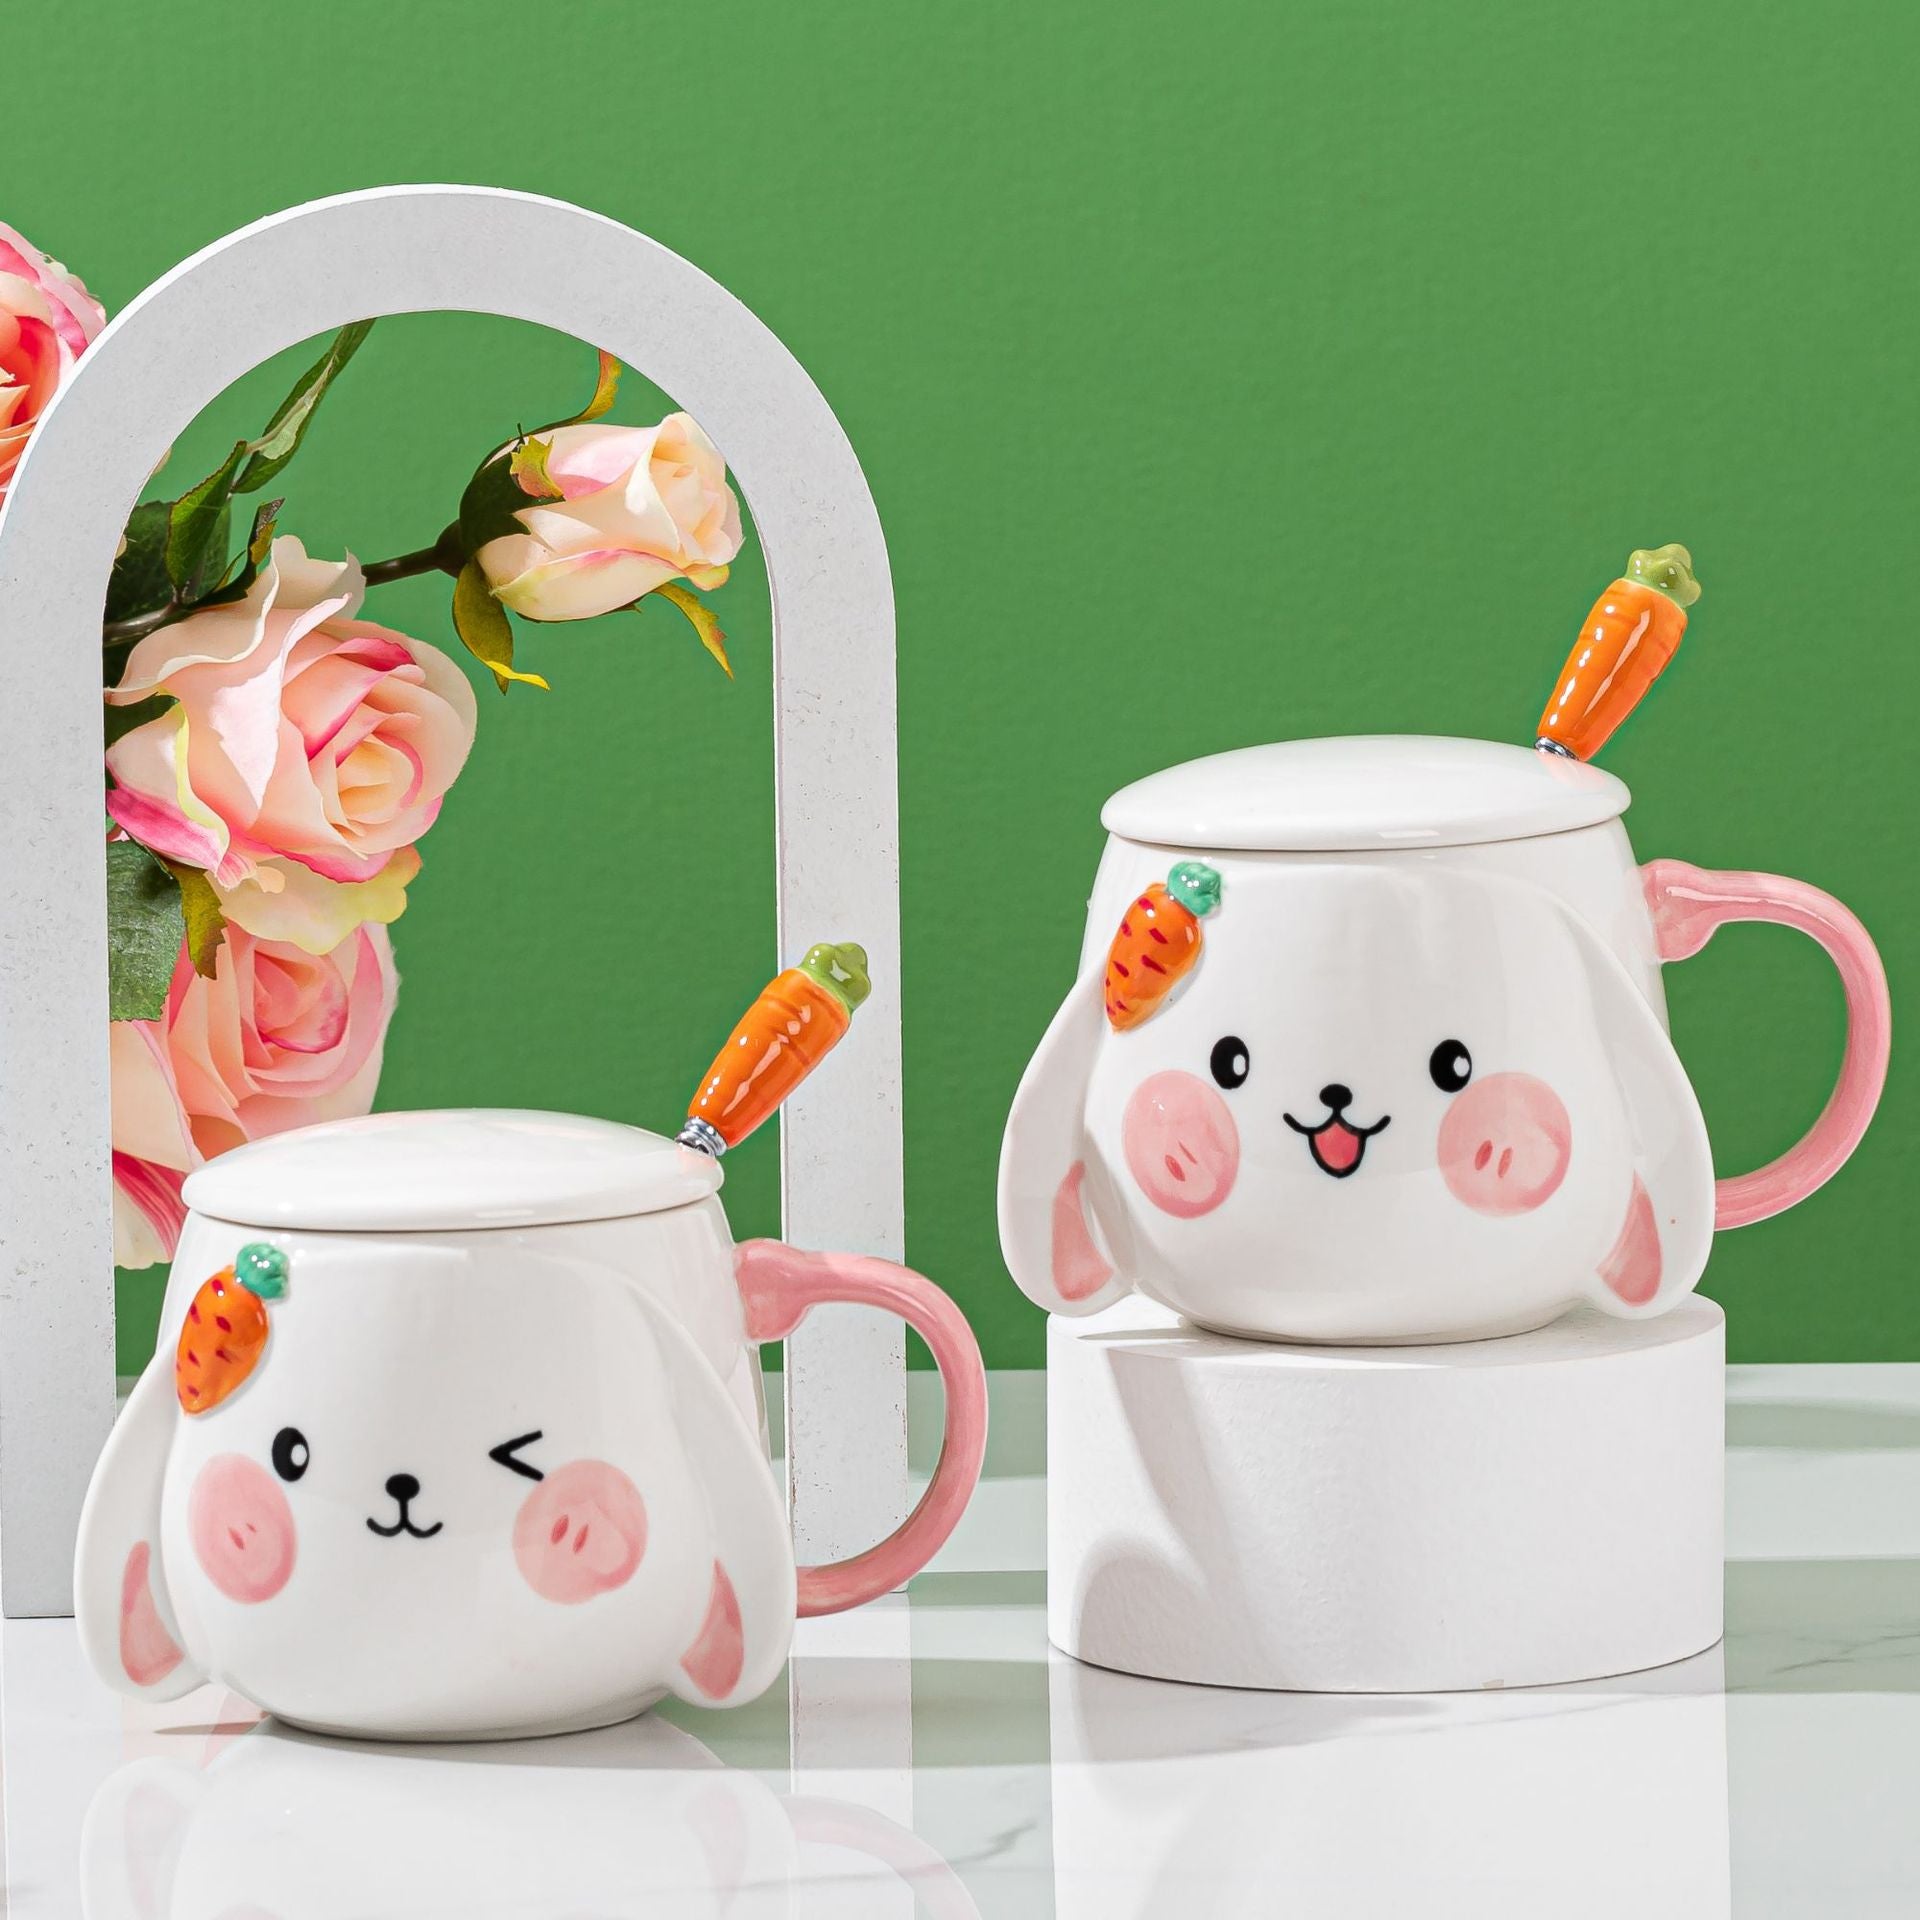 Kawaii Ceramic Bunny Mugs With Lids & Carrot Spoons